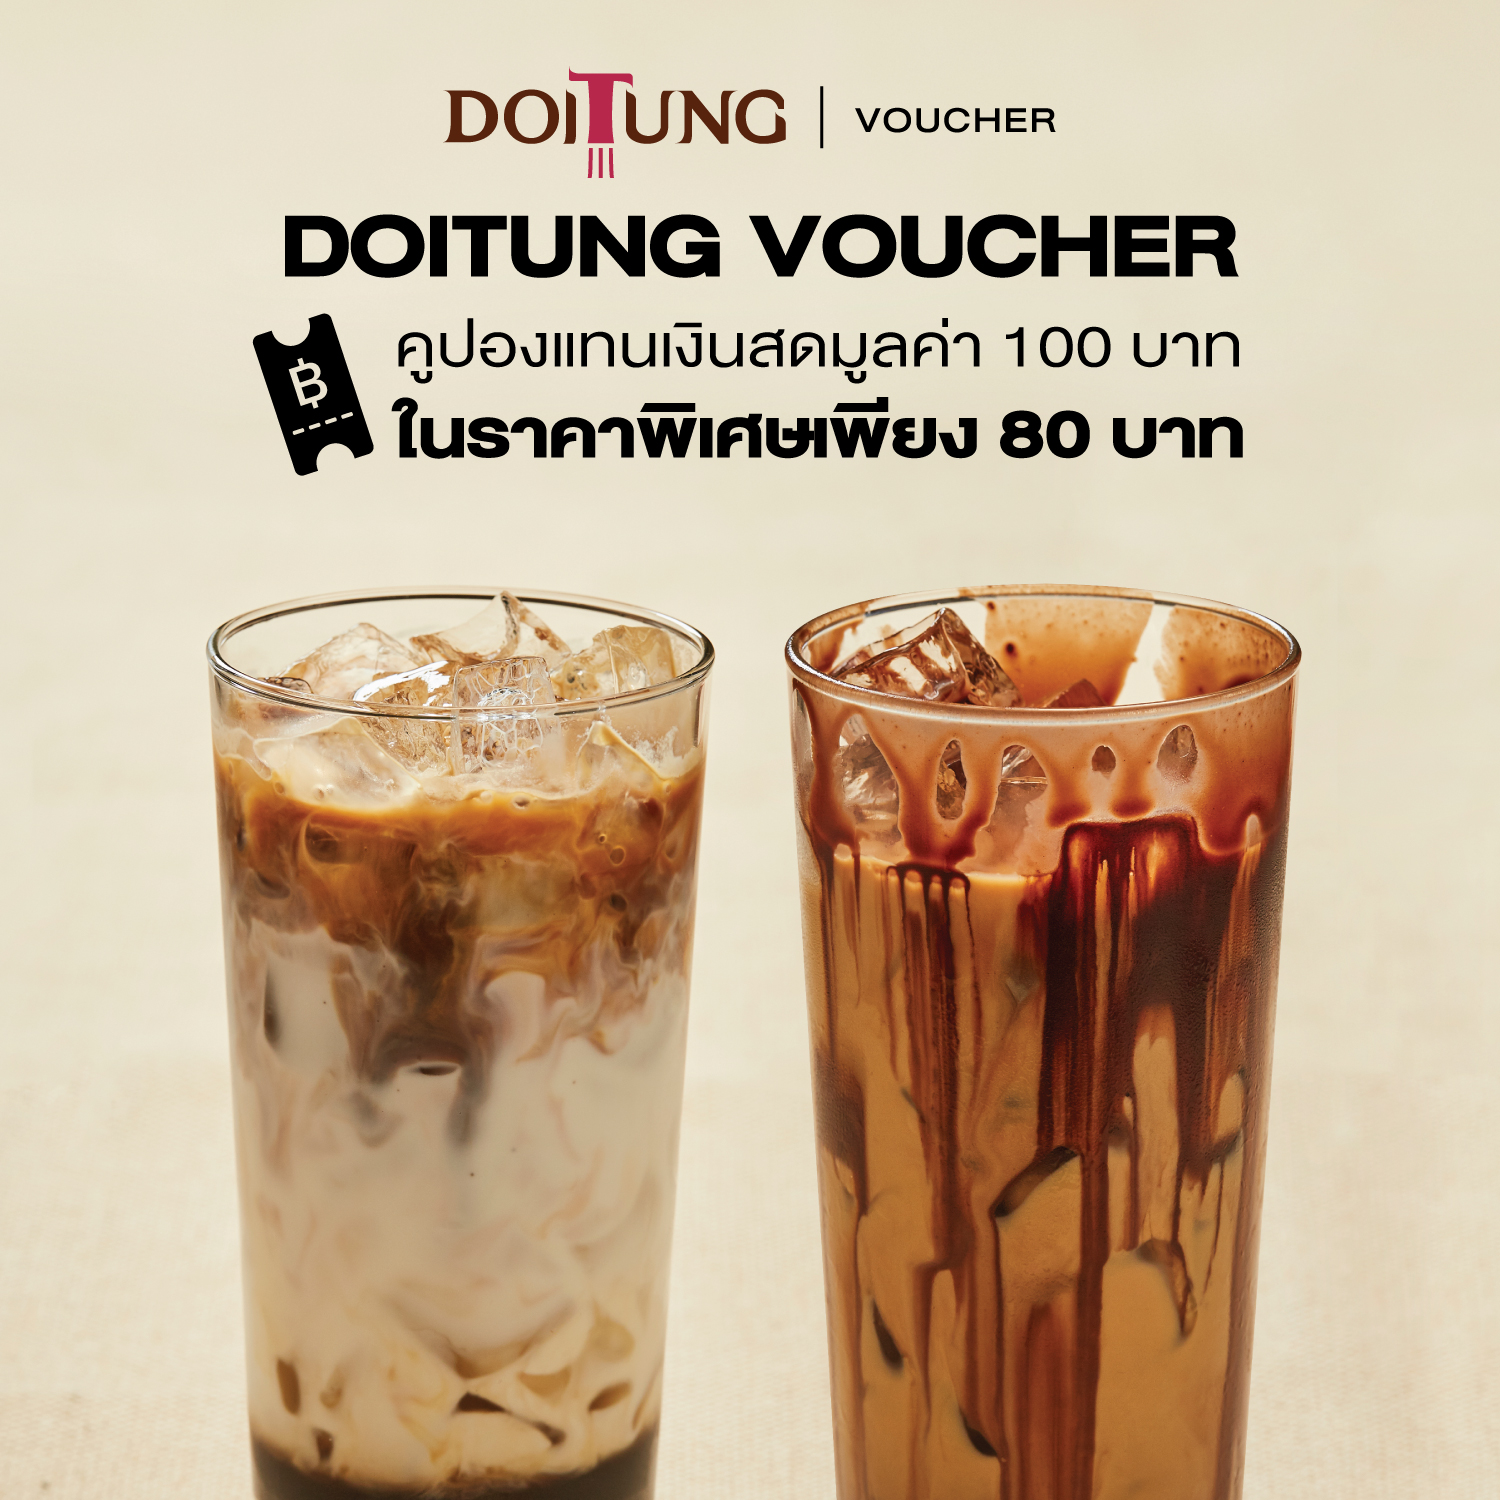 [E - Voucher] บัตรกำนัลดิจิทัล ใช้แทนเงินสดมูลค่า 100 บาท คาเฟ่ดอยตุง Cafe DoiTung